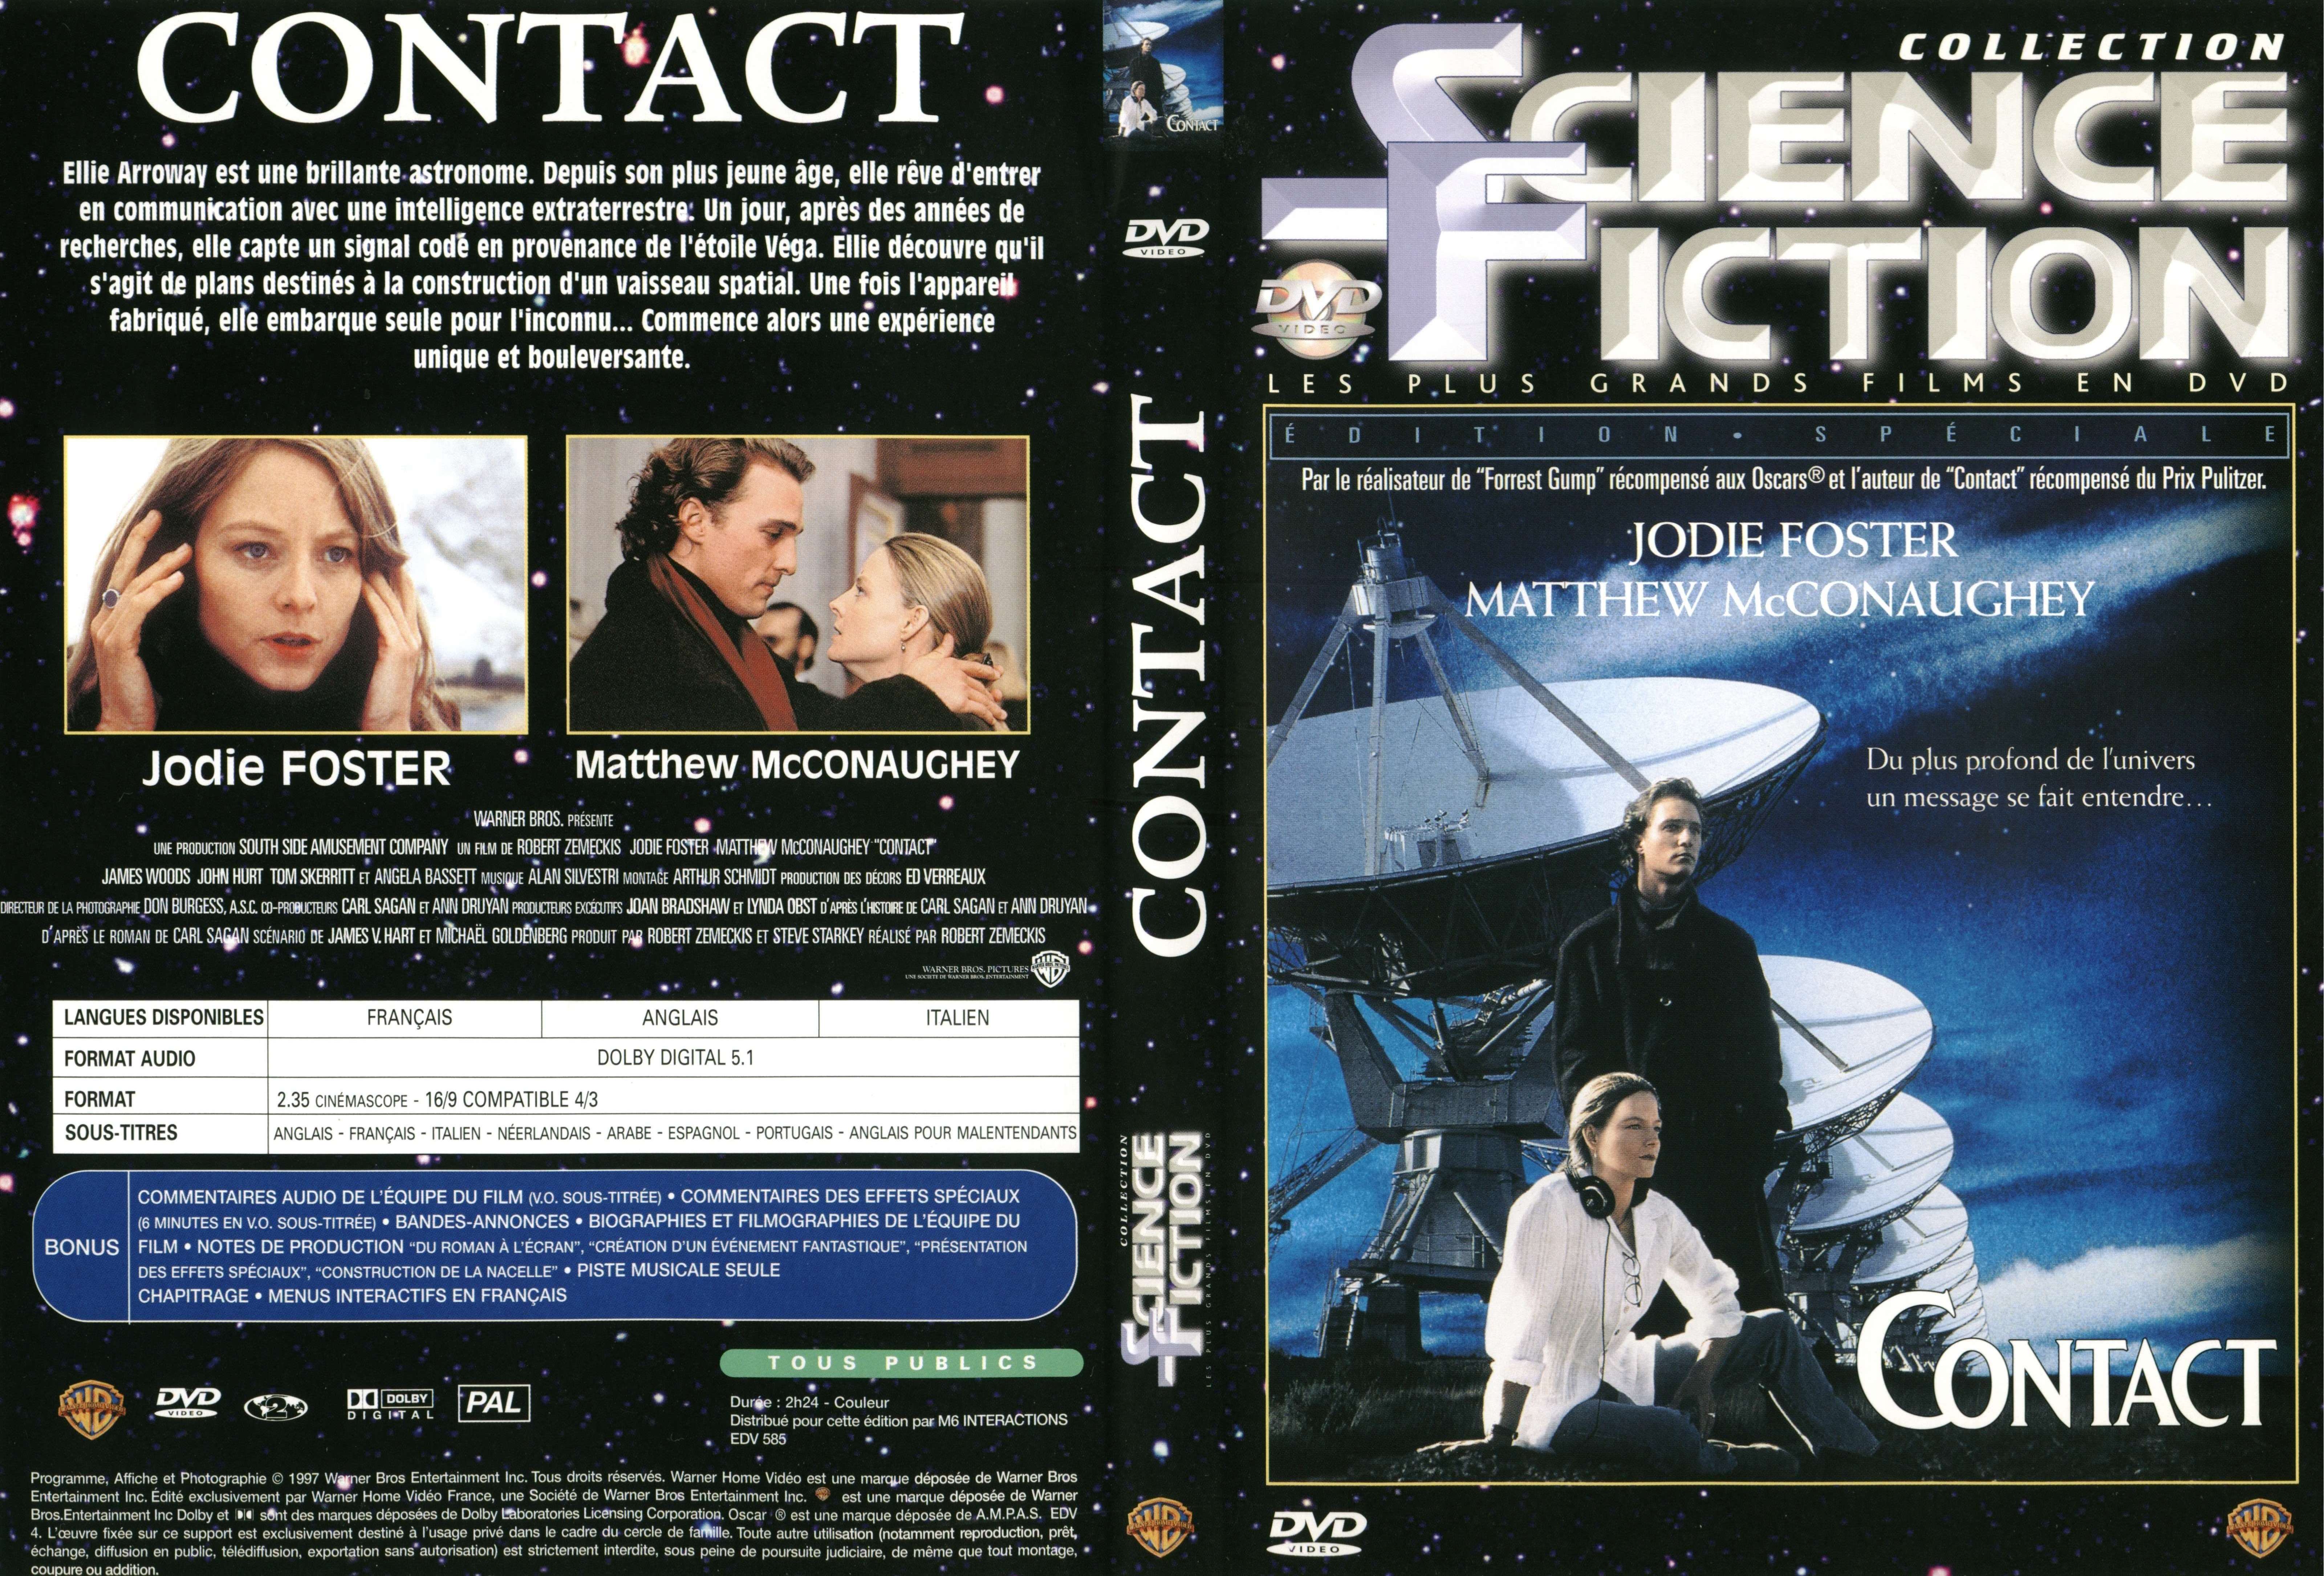 Jaquette DVD Contact v2